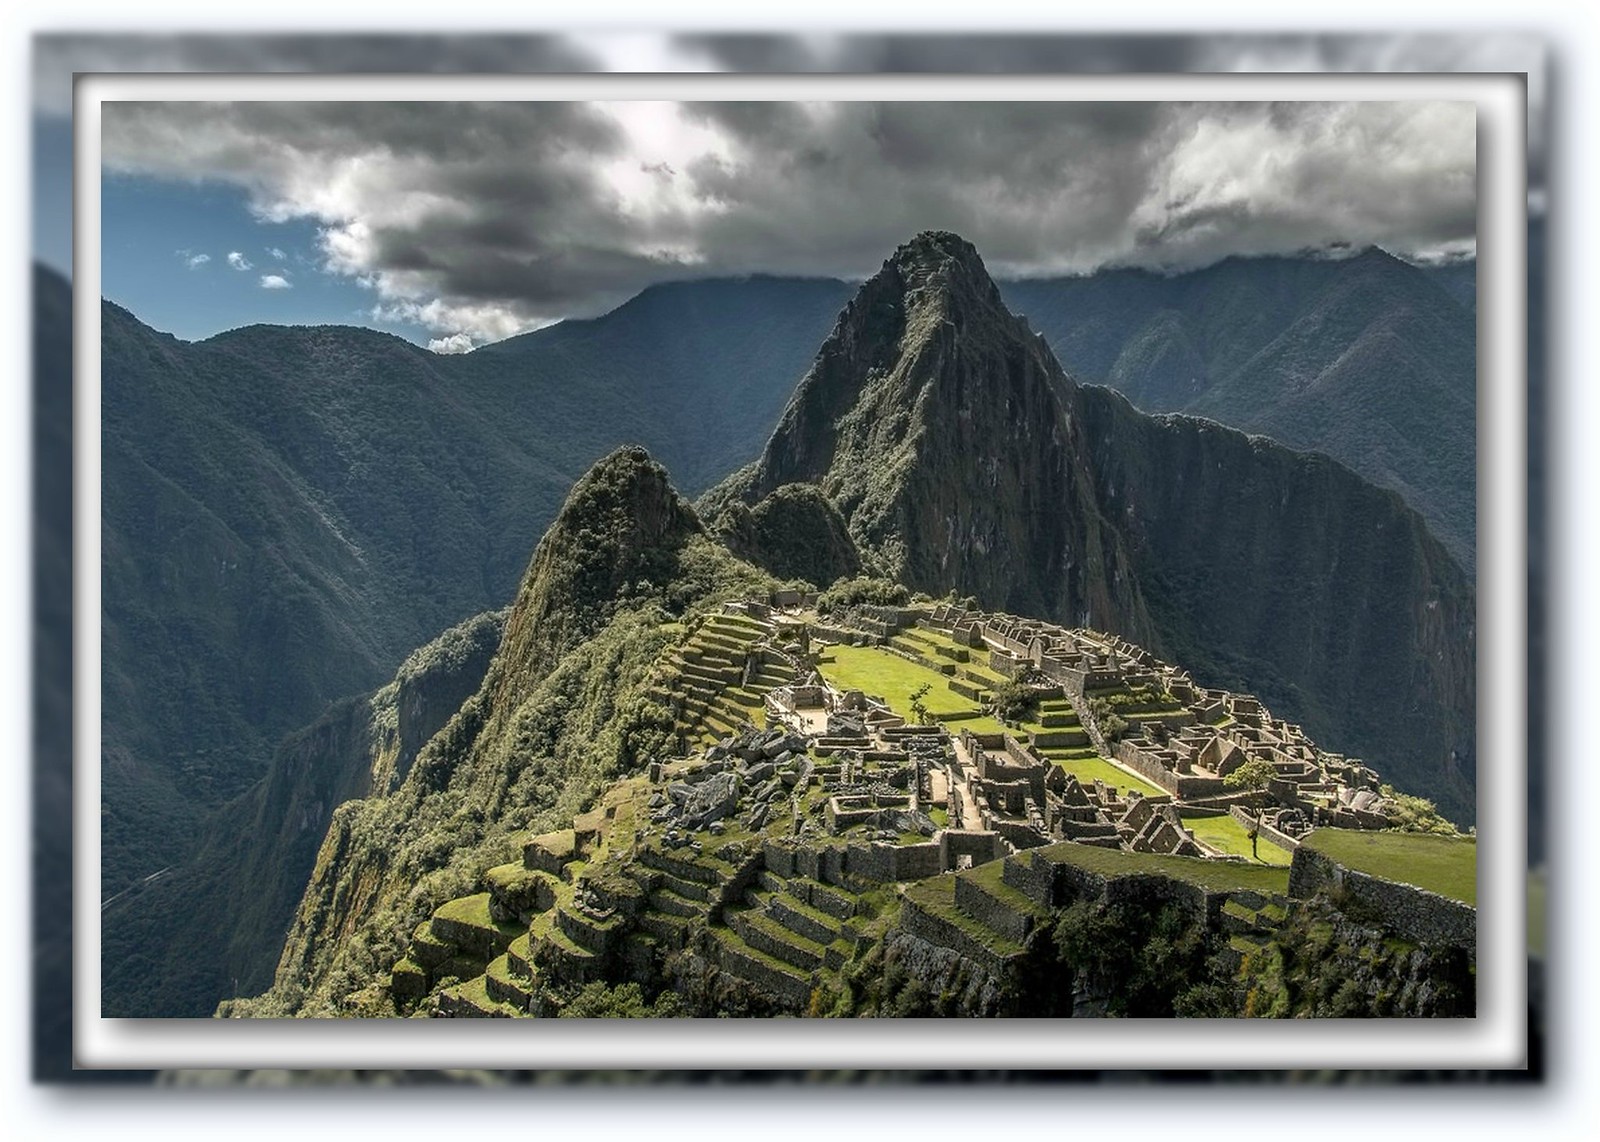 Machu Picchu - the lost city of the Incas